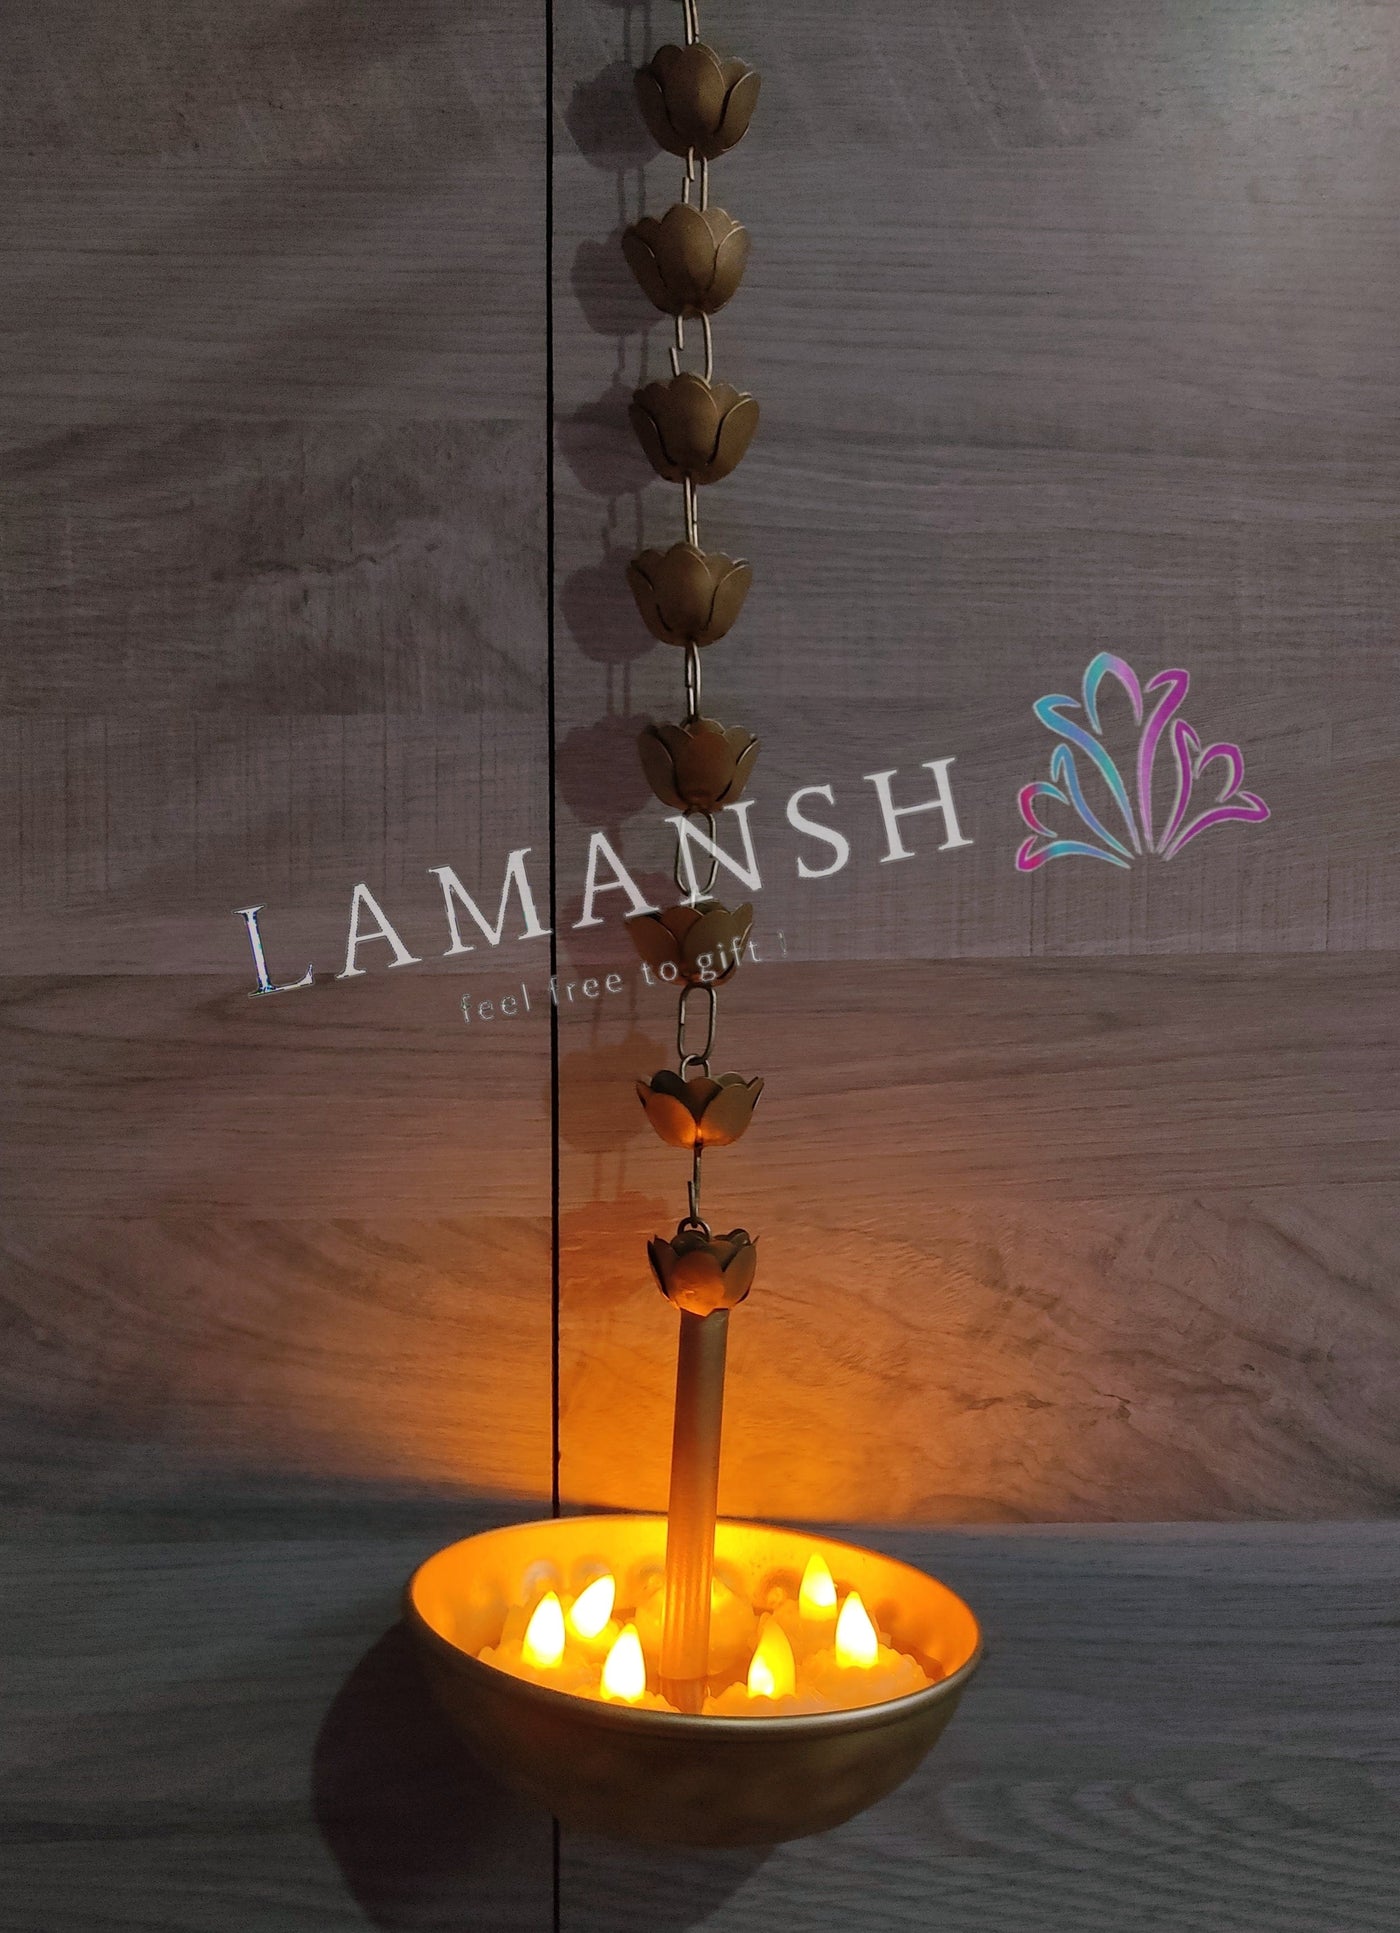 Lamansh urli LAMANSH® ( 1.5 feet height) Metal Wall Lotus Hanging Urli for Ganpati / Diwali Festival decoration / Metal Designer urli for pooja mandir home decoration